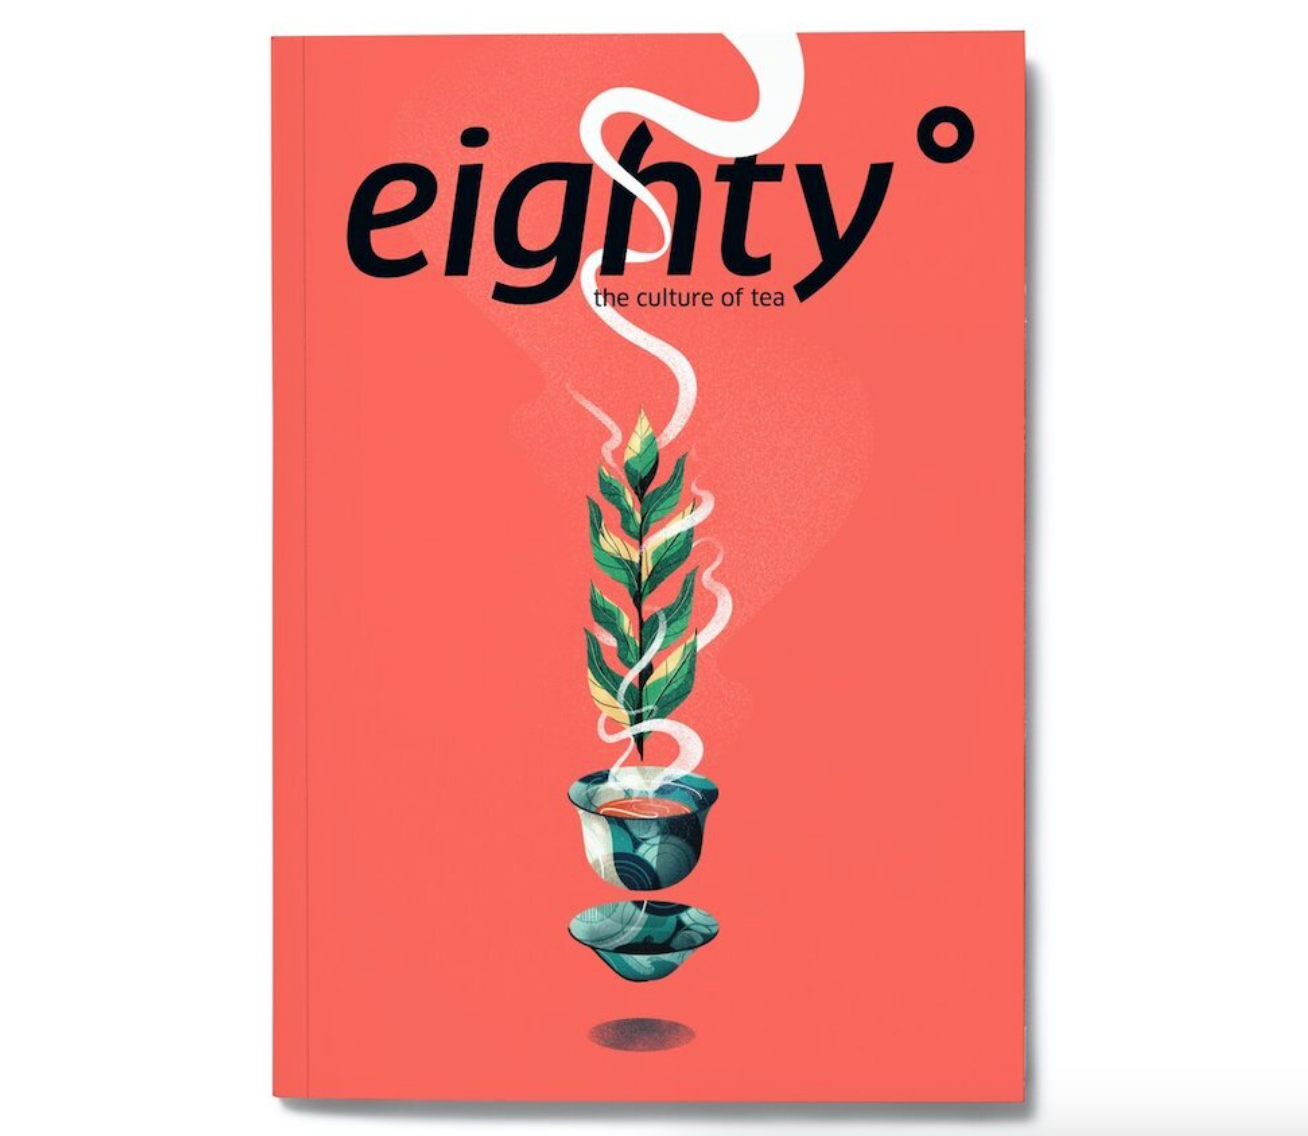 Eighty degrees tea magazine - Issue 3